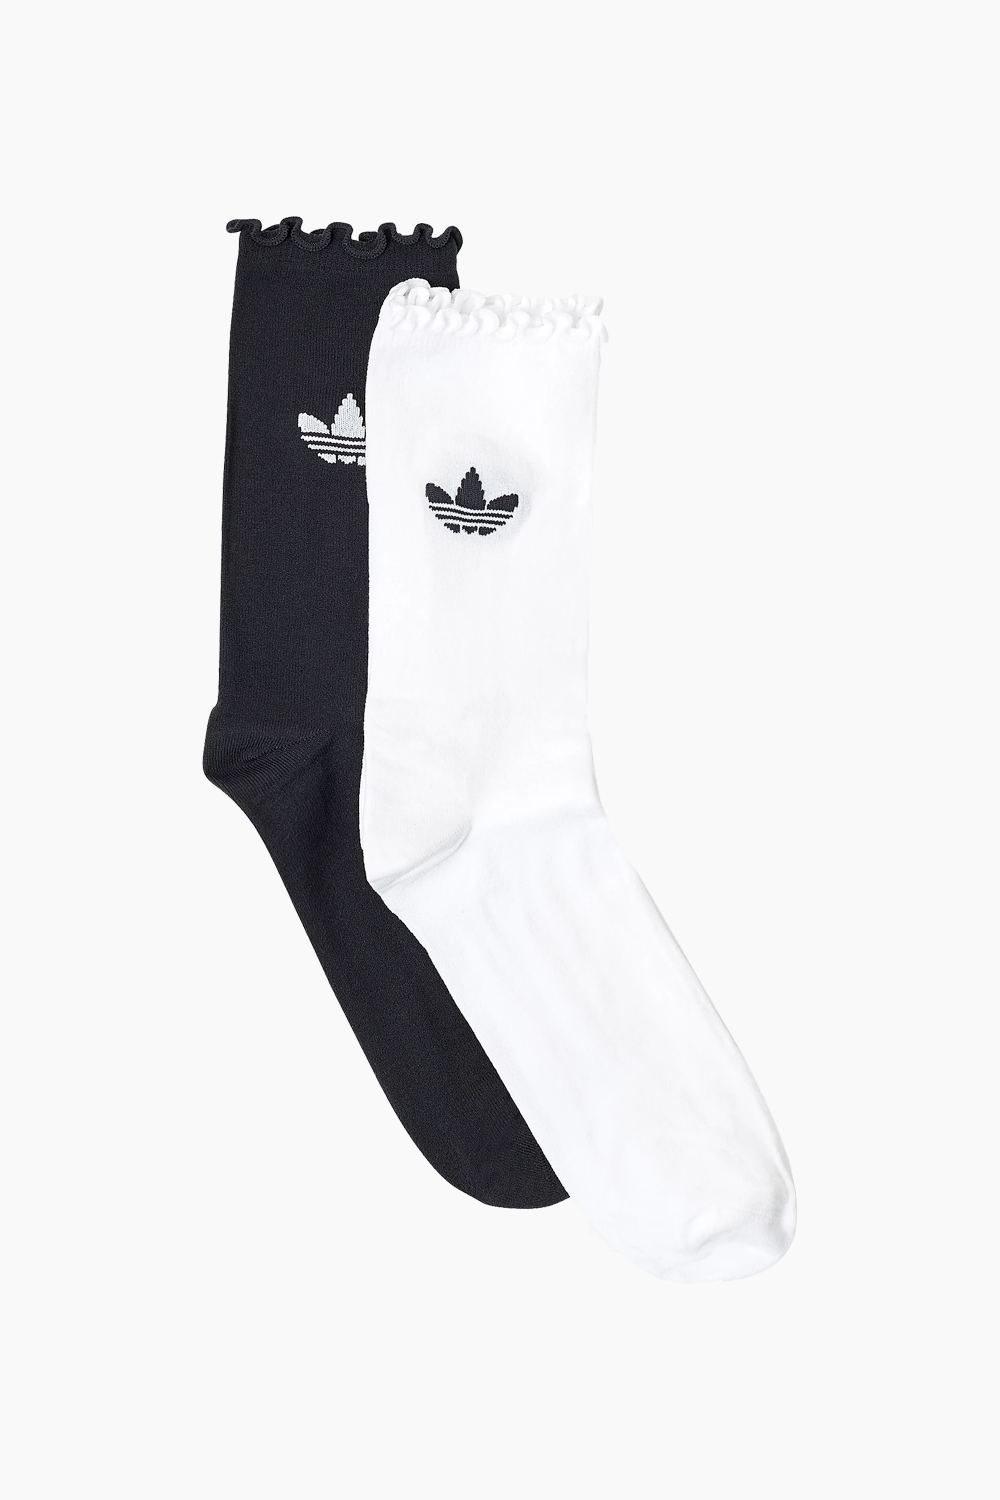 Crw 2PP Socks i White/Black fra Adidas Originals - Shop nu! QNTS.dk